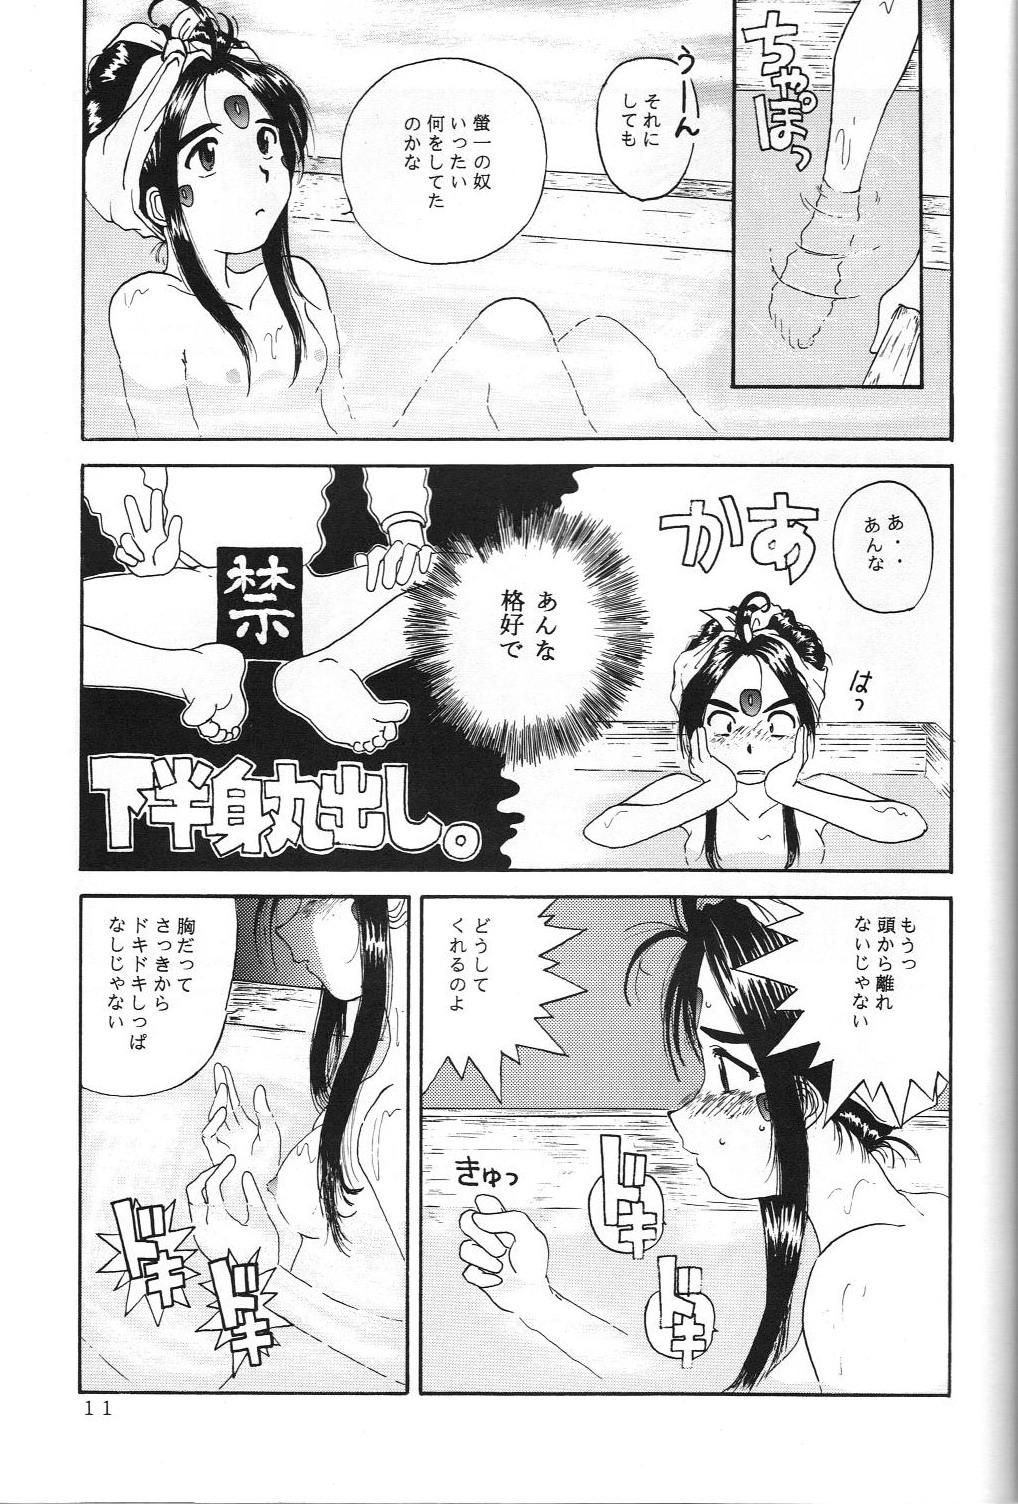 Extreme THE SECRET OF Chimatsuriya Vol. 5 - Ah my goddess Club - Page 10